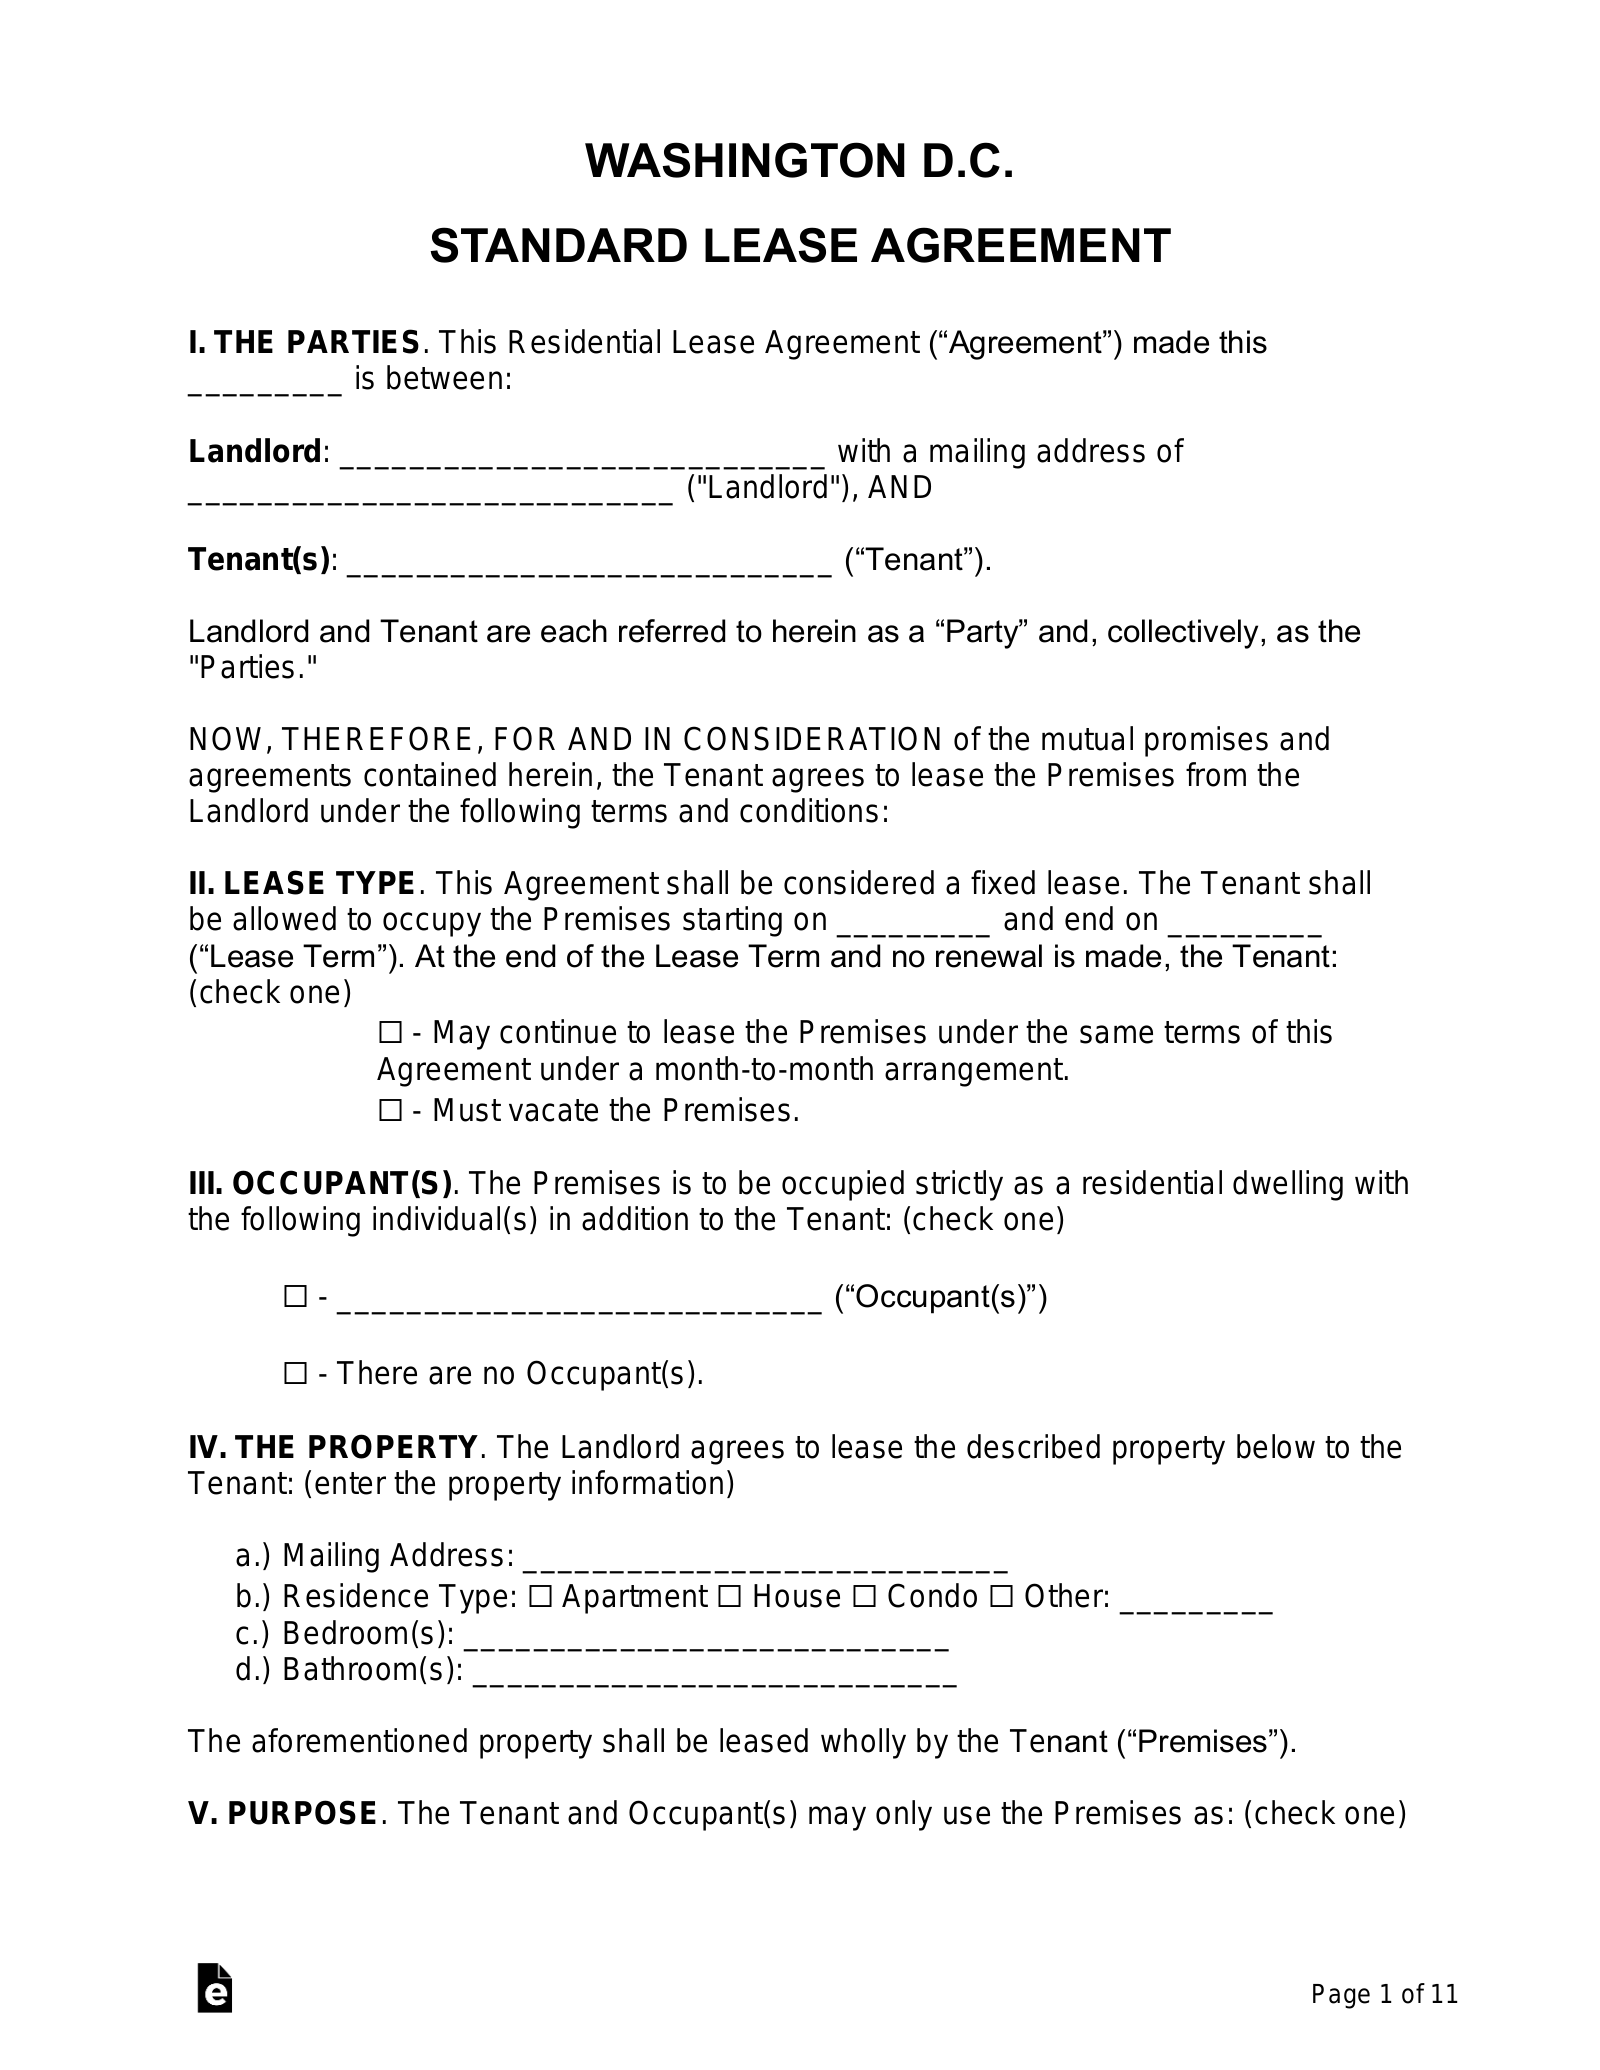 Washington D.C. Standard Residential Lease Agreement